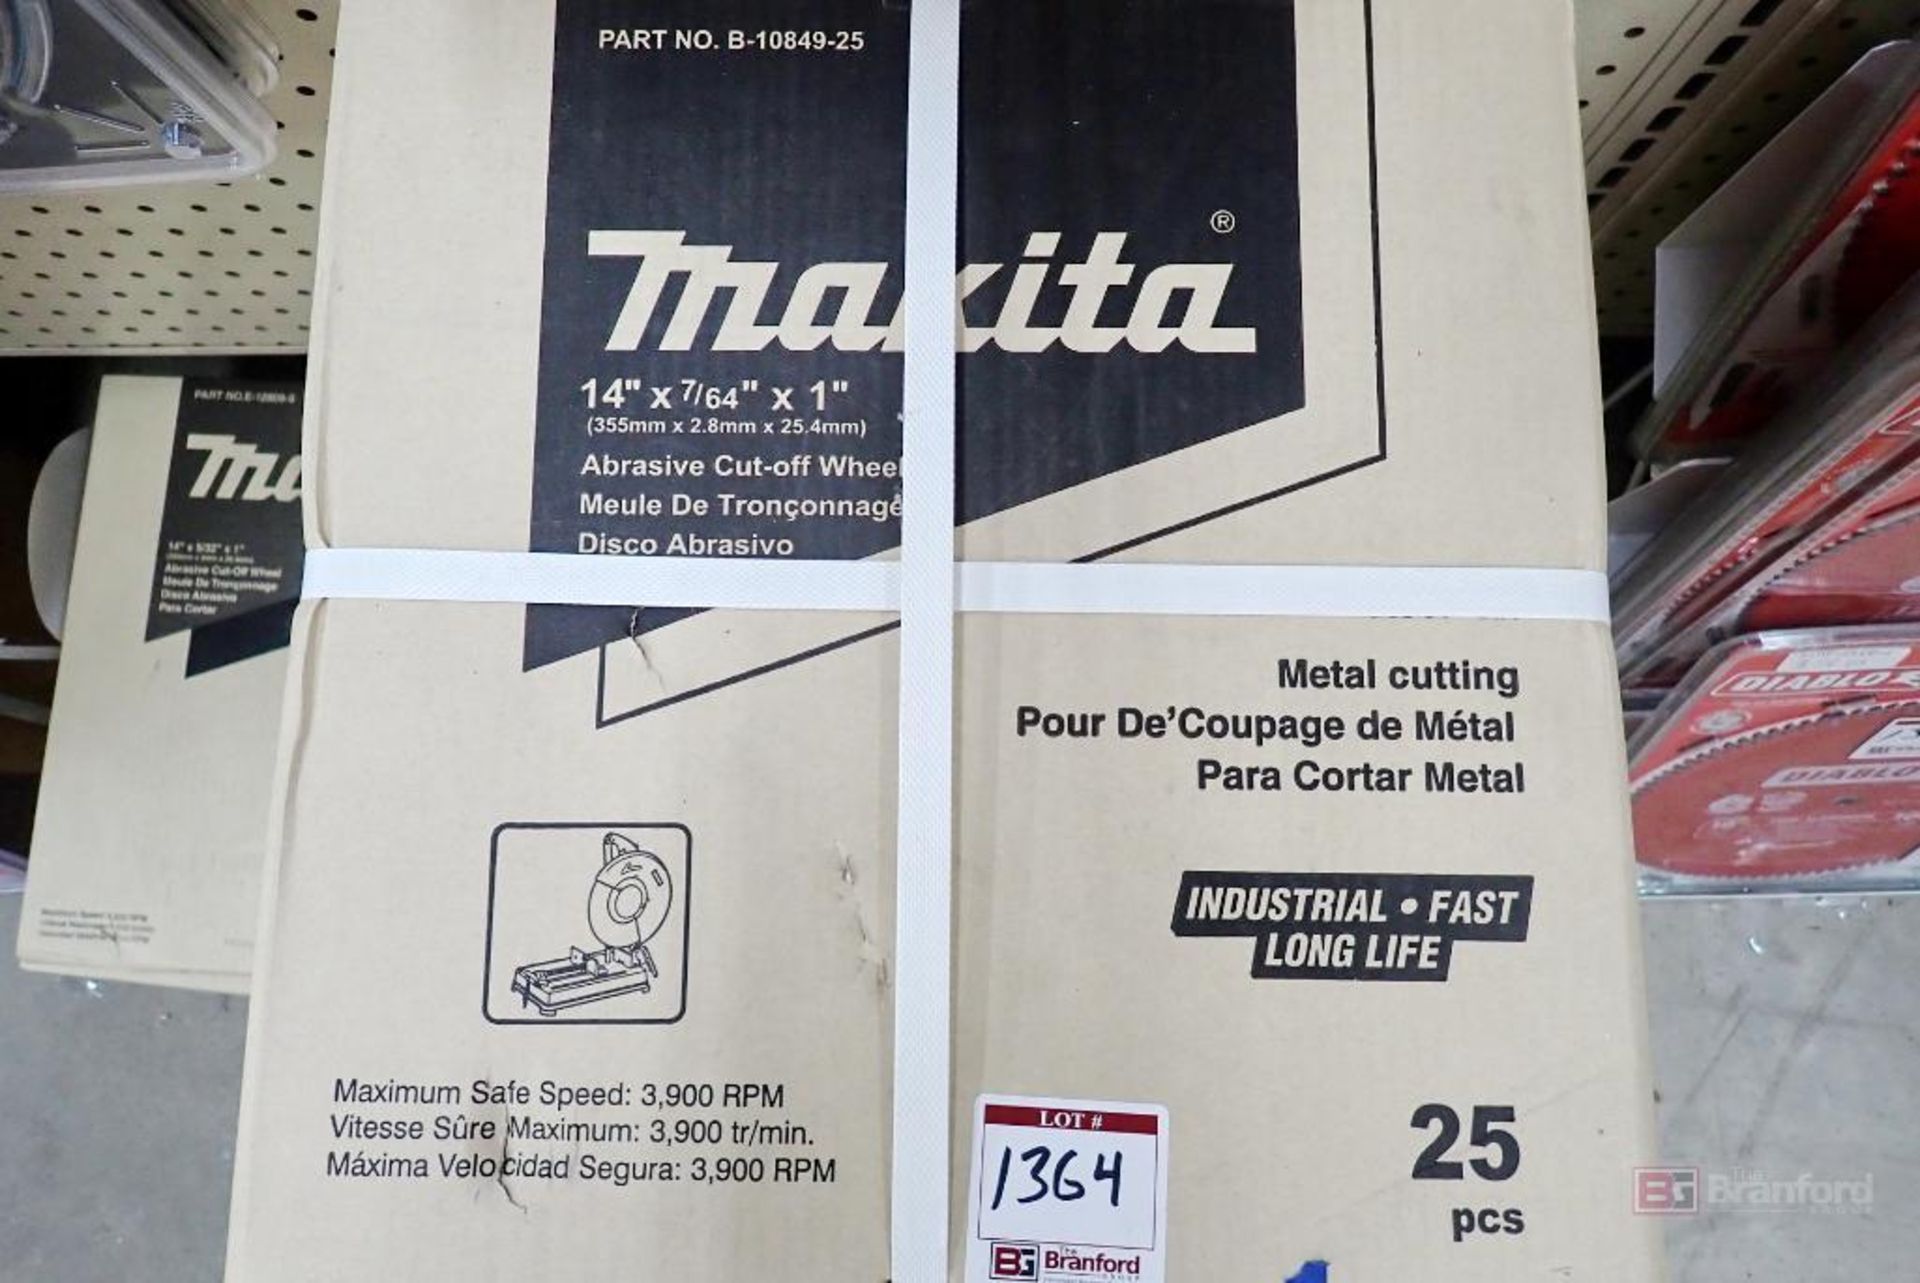 (2) Cases of 25 Pc Per Box (50 Total) Makita B-10849-25 Metal Cutting Blades - Image 2 of 3